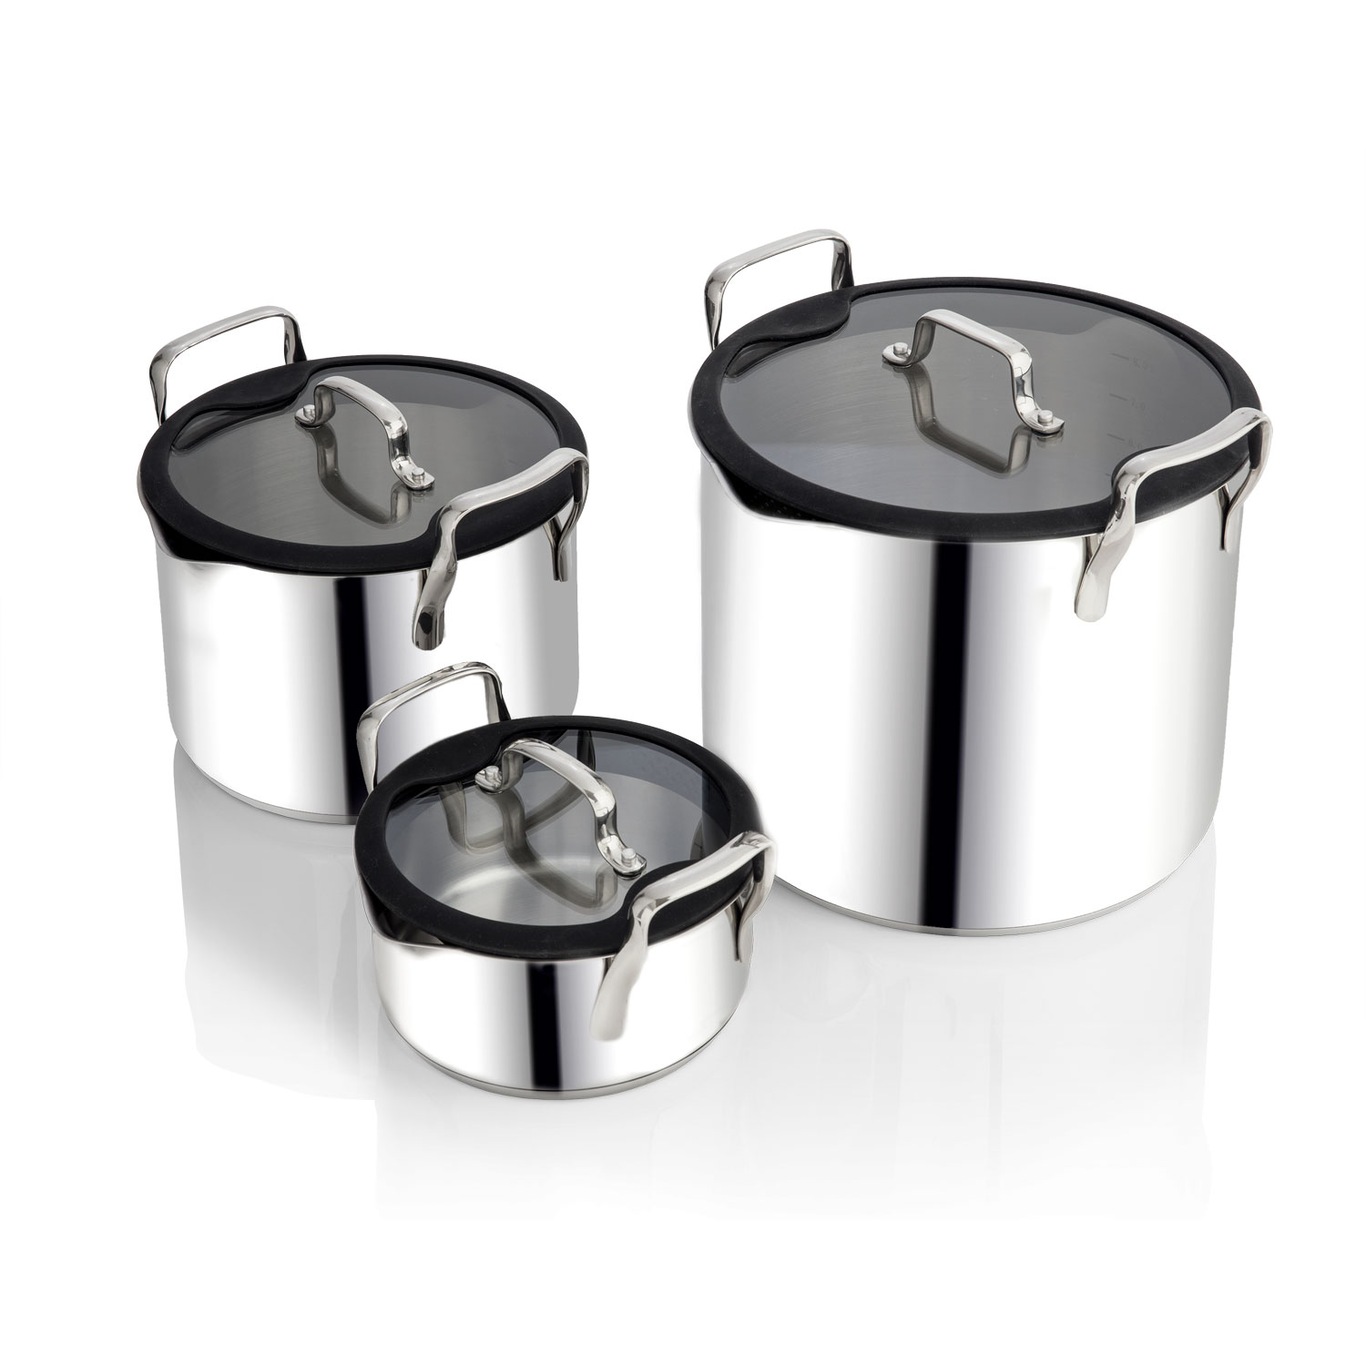 https://royaldesign.com/image/2/ego-stackable-pot-set-stainless-steel-0?w=800&quality=80